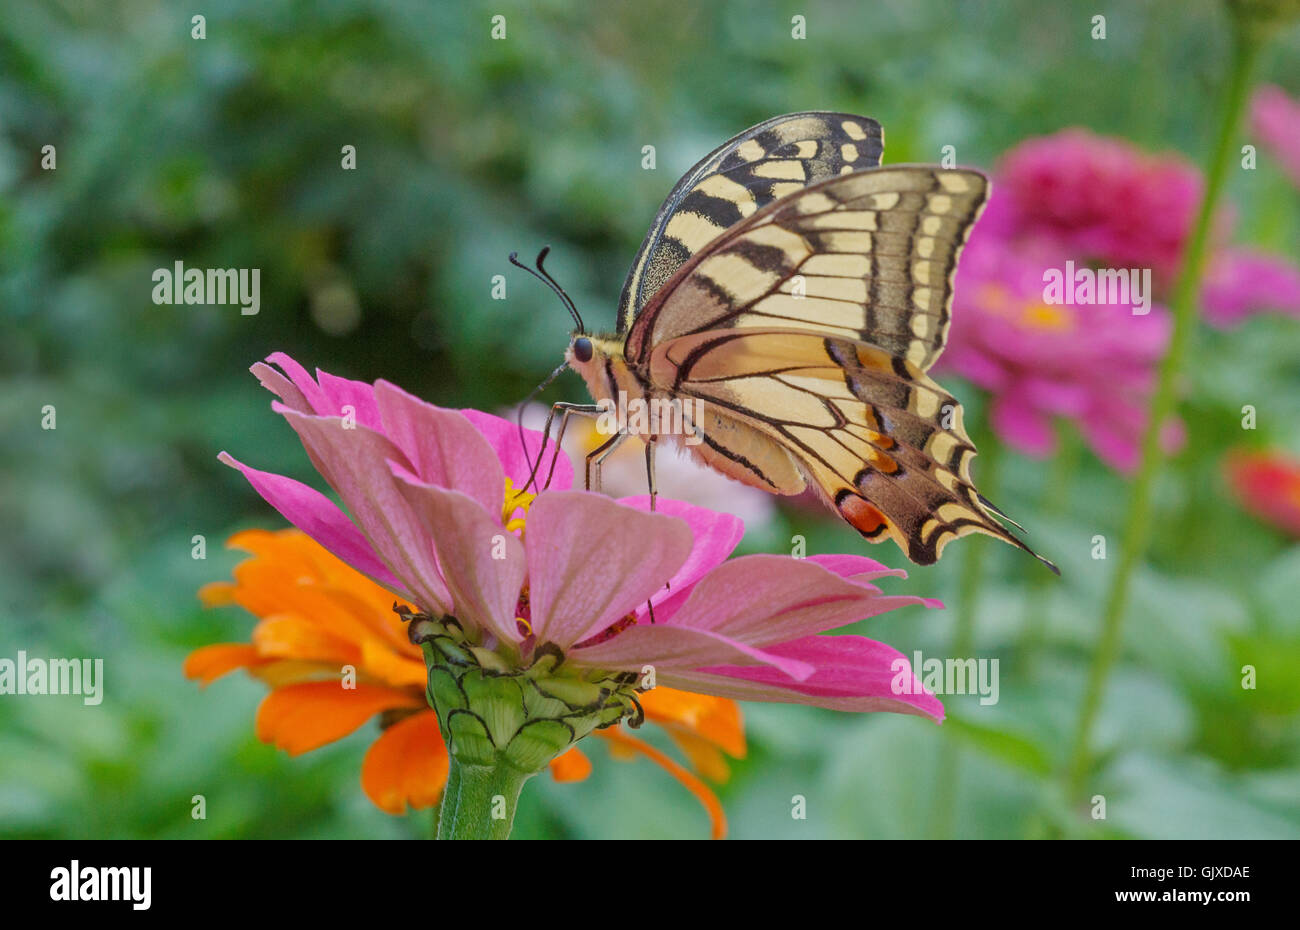 Papilio Machaon butterfly on zinnia flower in garden Stock Photo